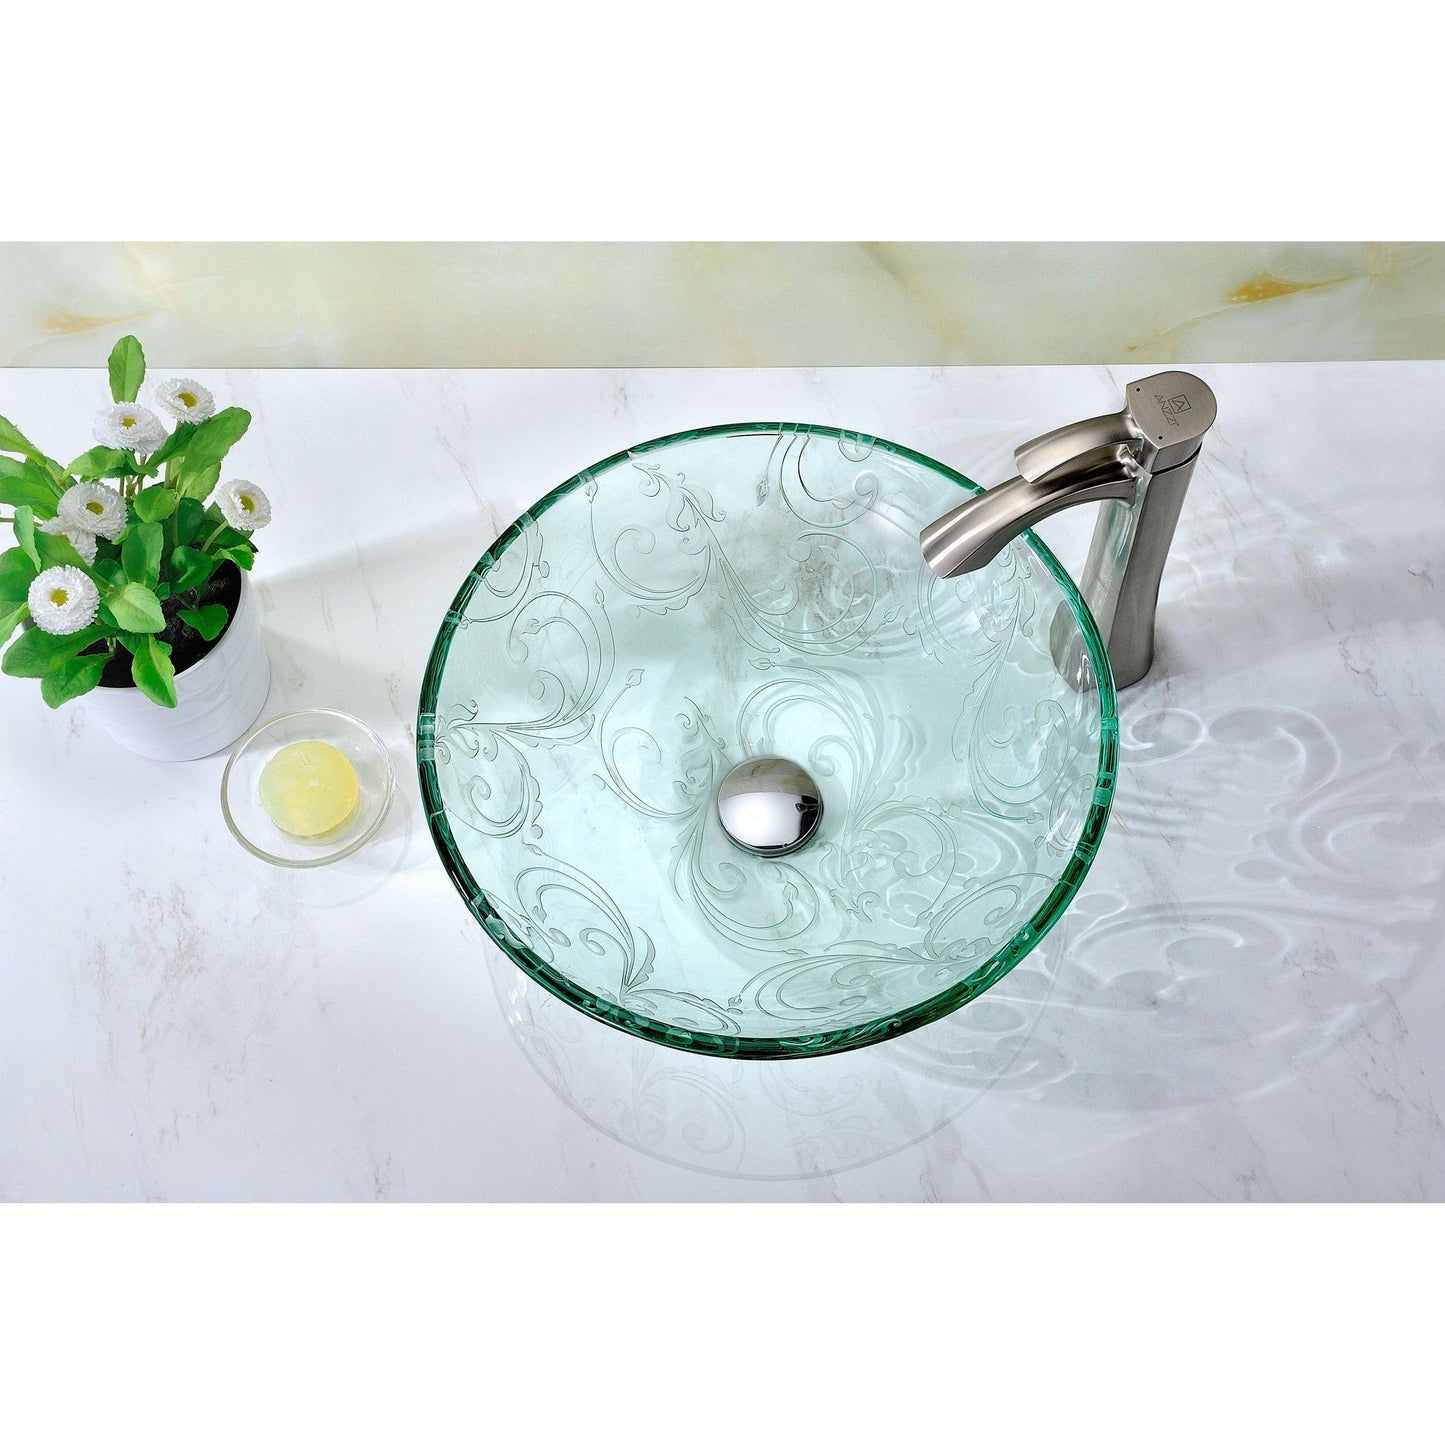 ANZZI Kolokiki Series 17" x 17" Round Crystal Clear Deco-Glass Vessel Sink With Polished Chrome Pop-Up Drain